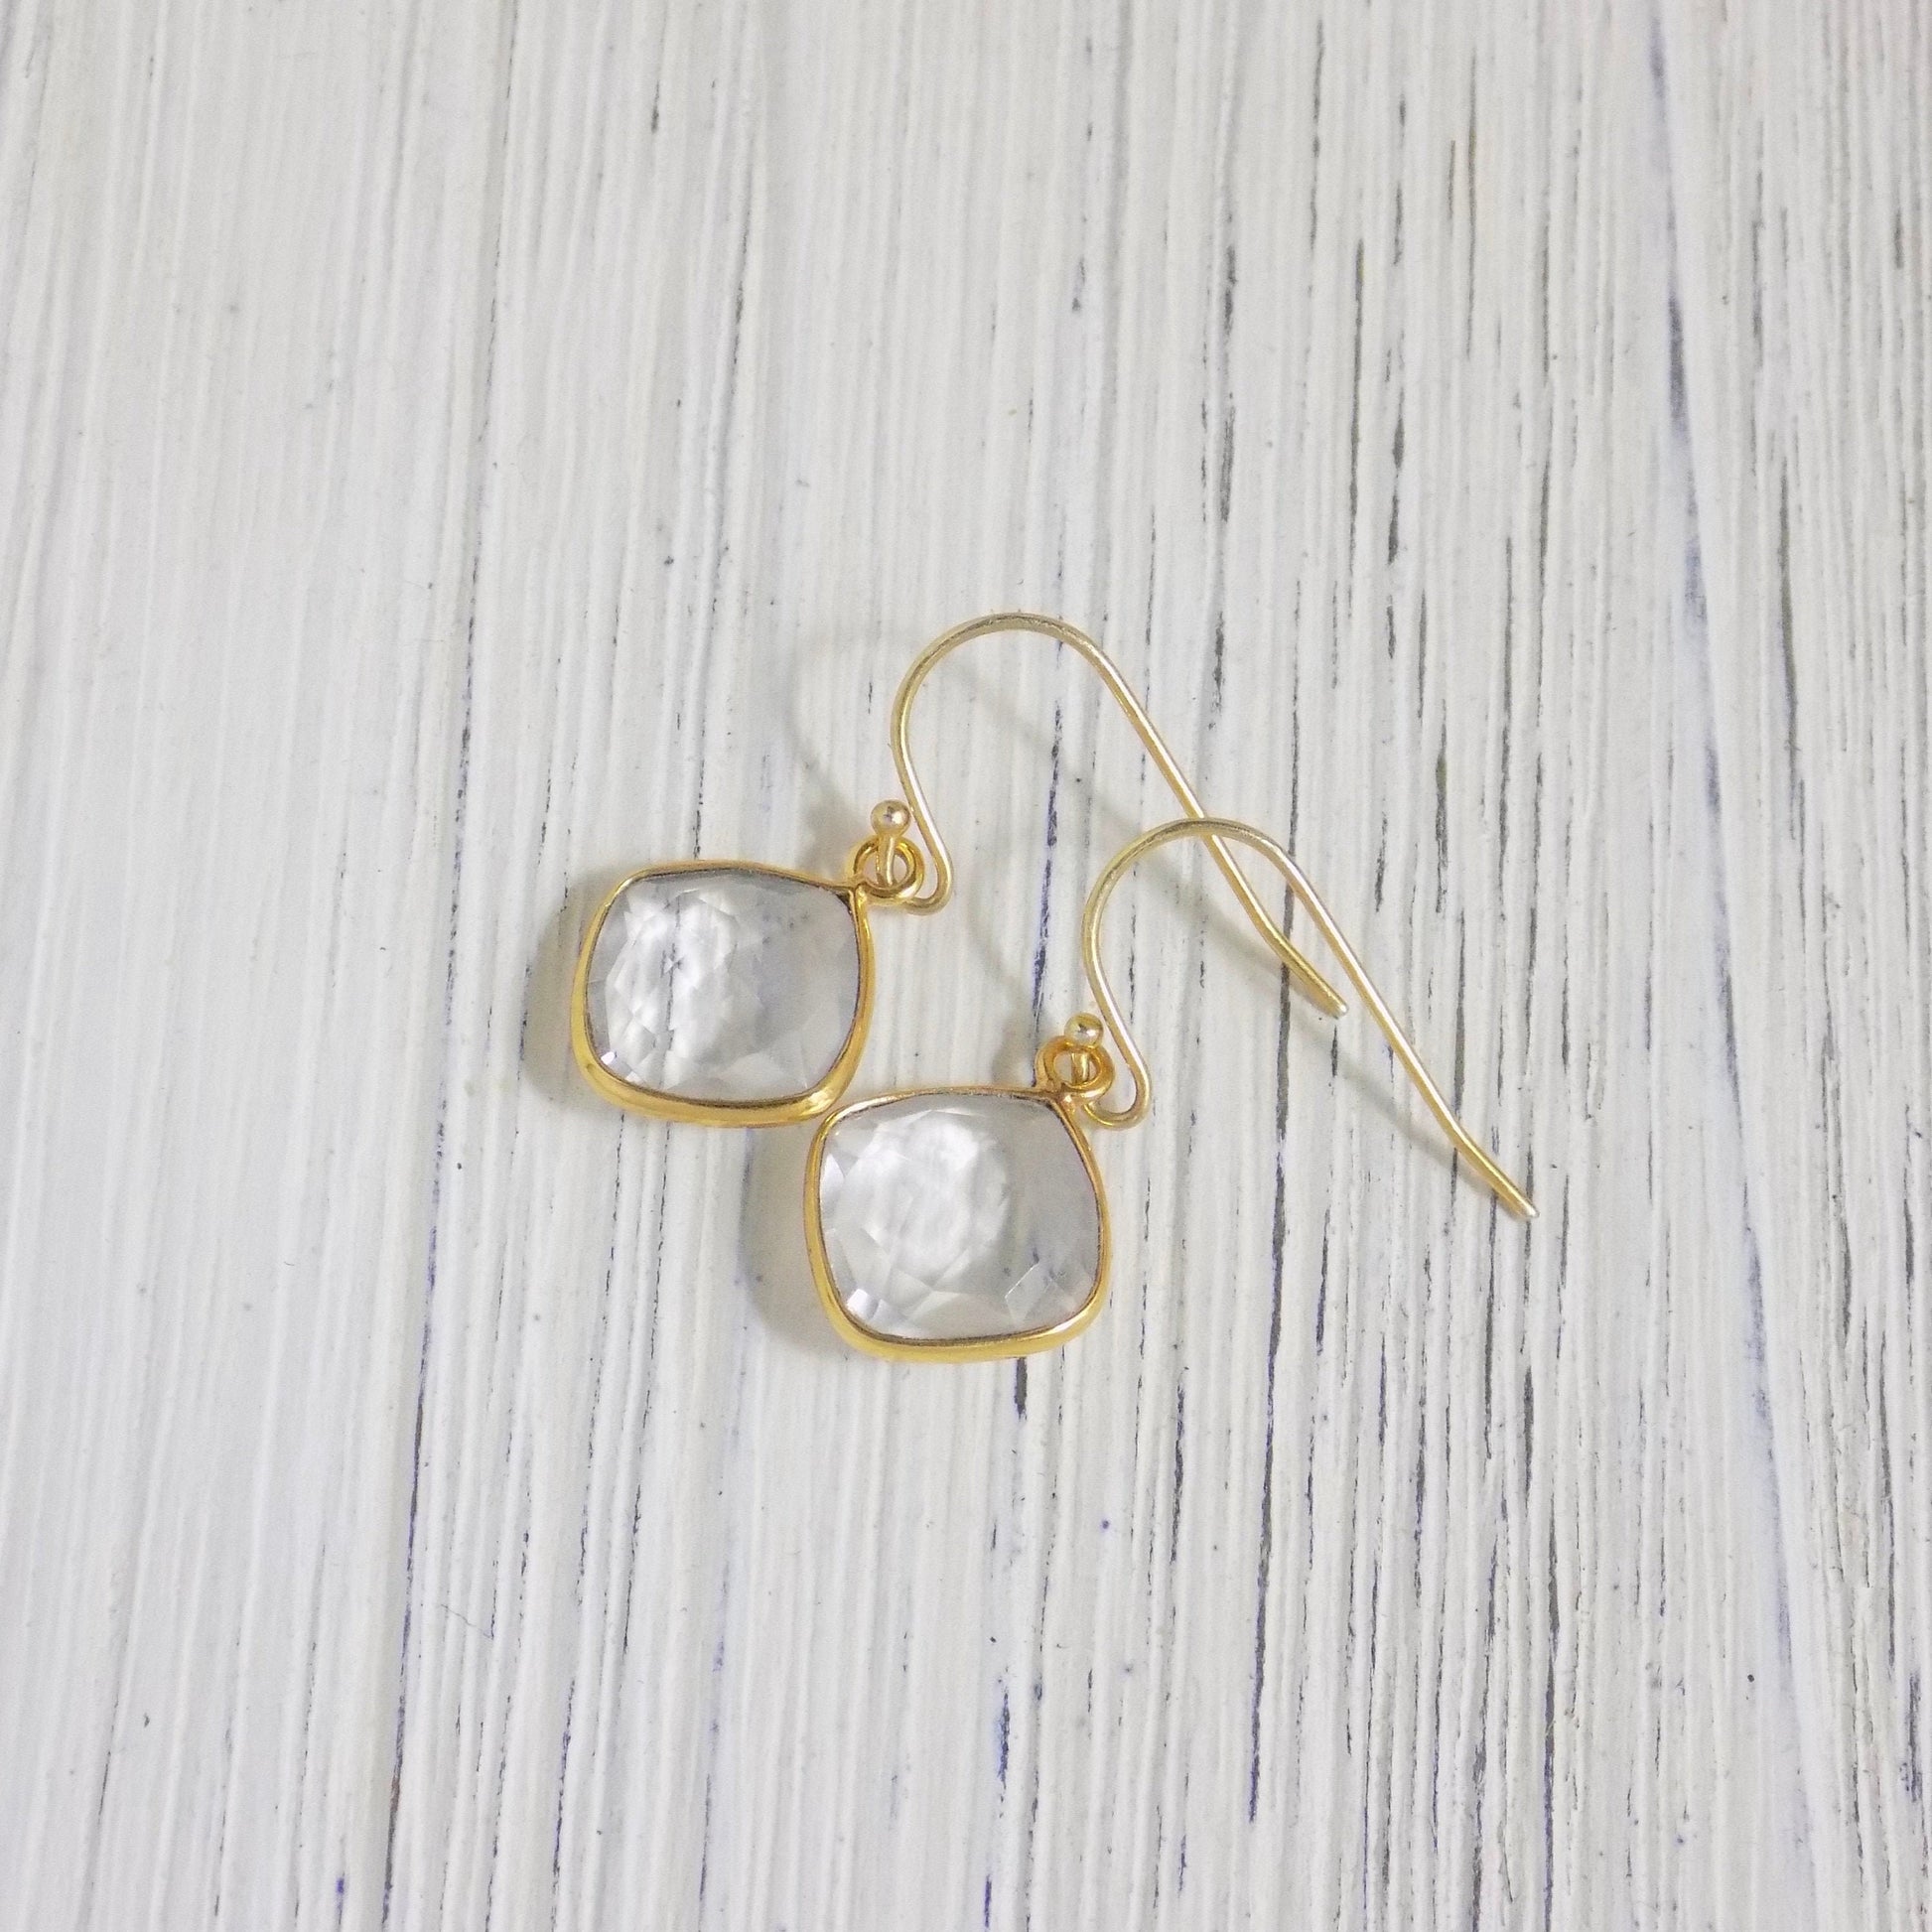 Cushion Cut Clear Crystal Quartz Earrings in Gold Plating, M5-300